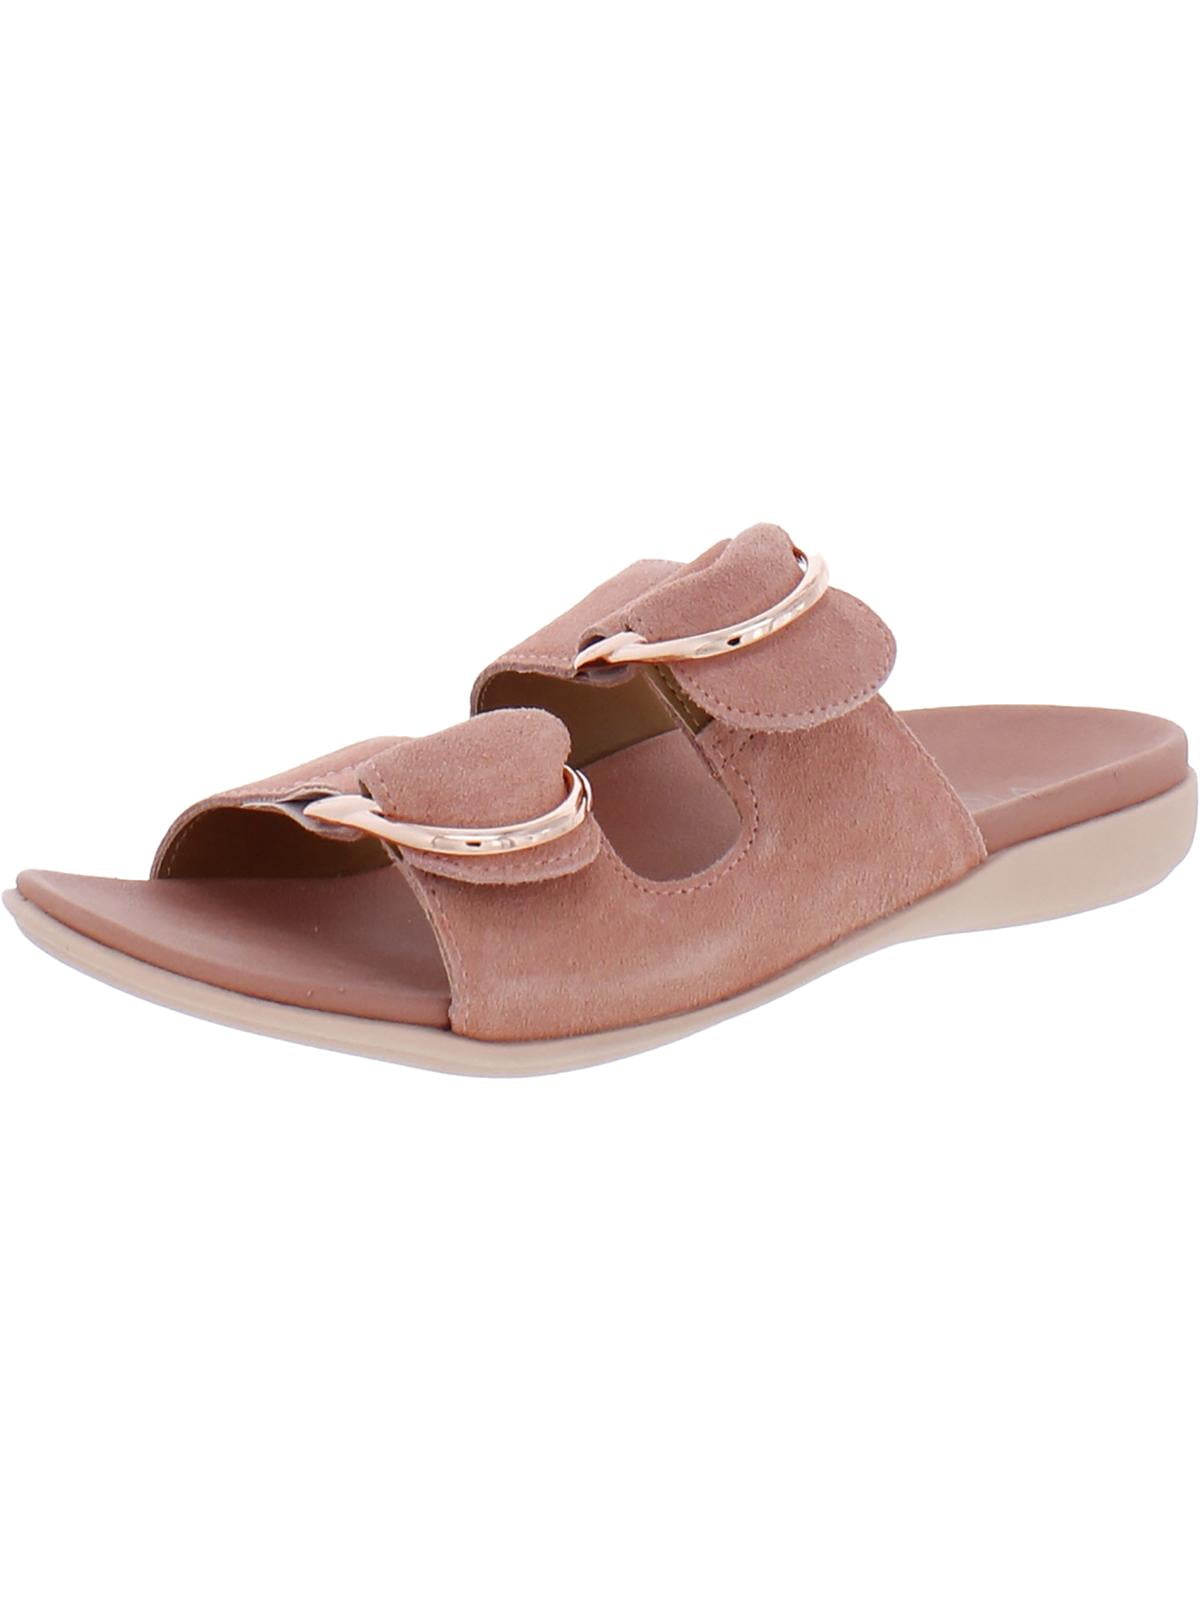 Vionic Womens Corlee Suede Slip On Slide Sandals - Walmart.com